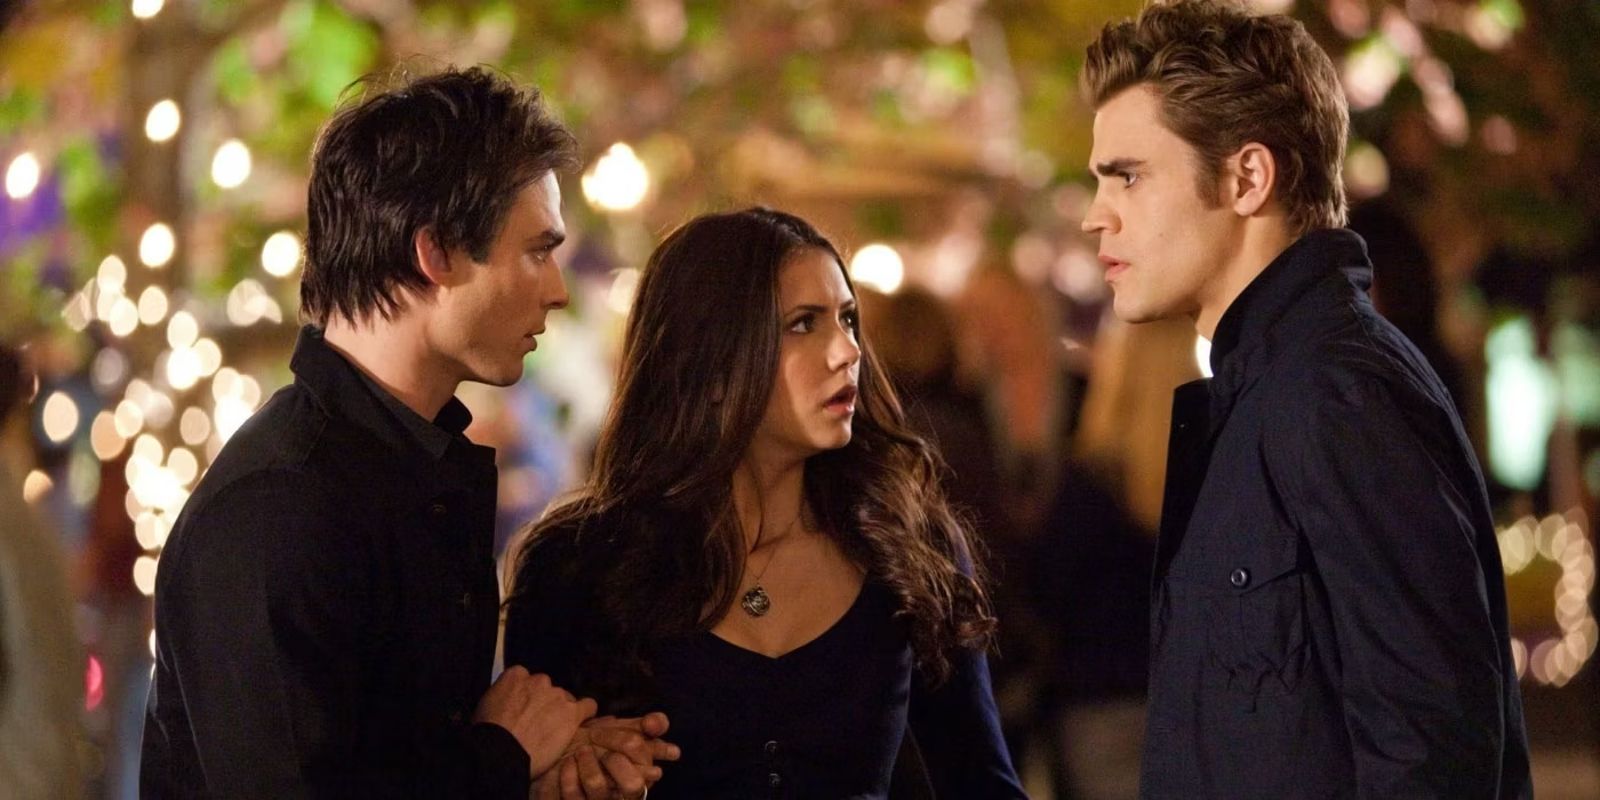 Damon Elena and Stefan Talk on the Street in The Vampire Diaries